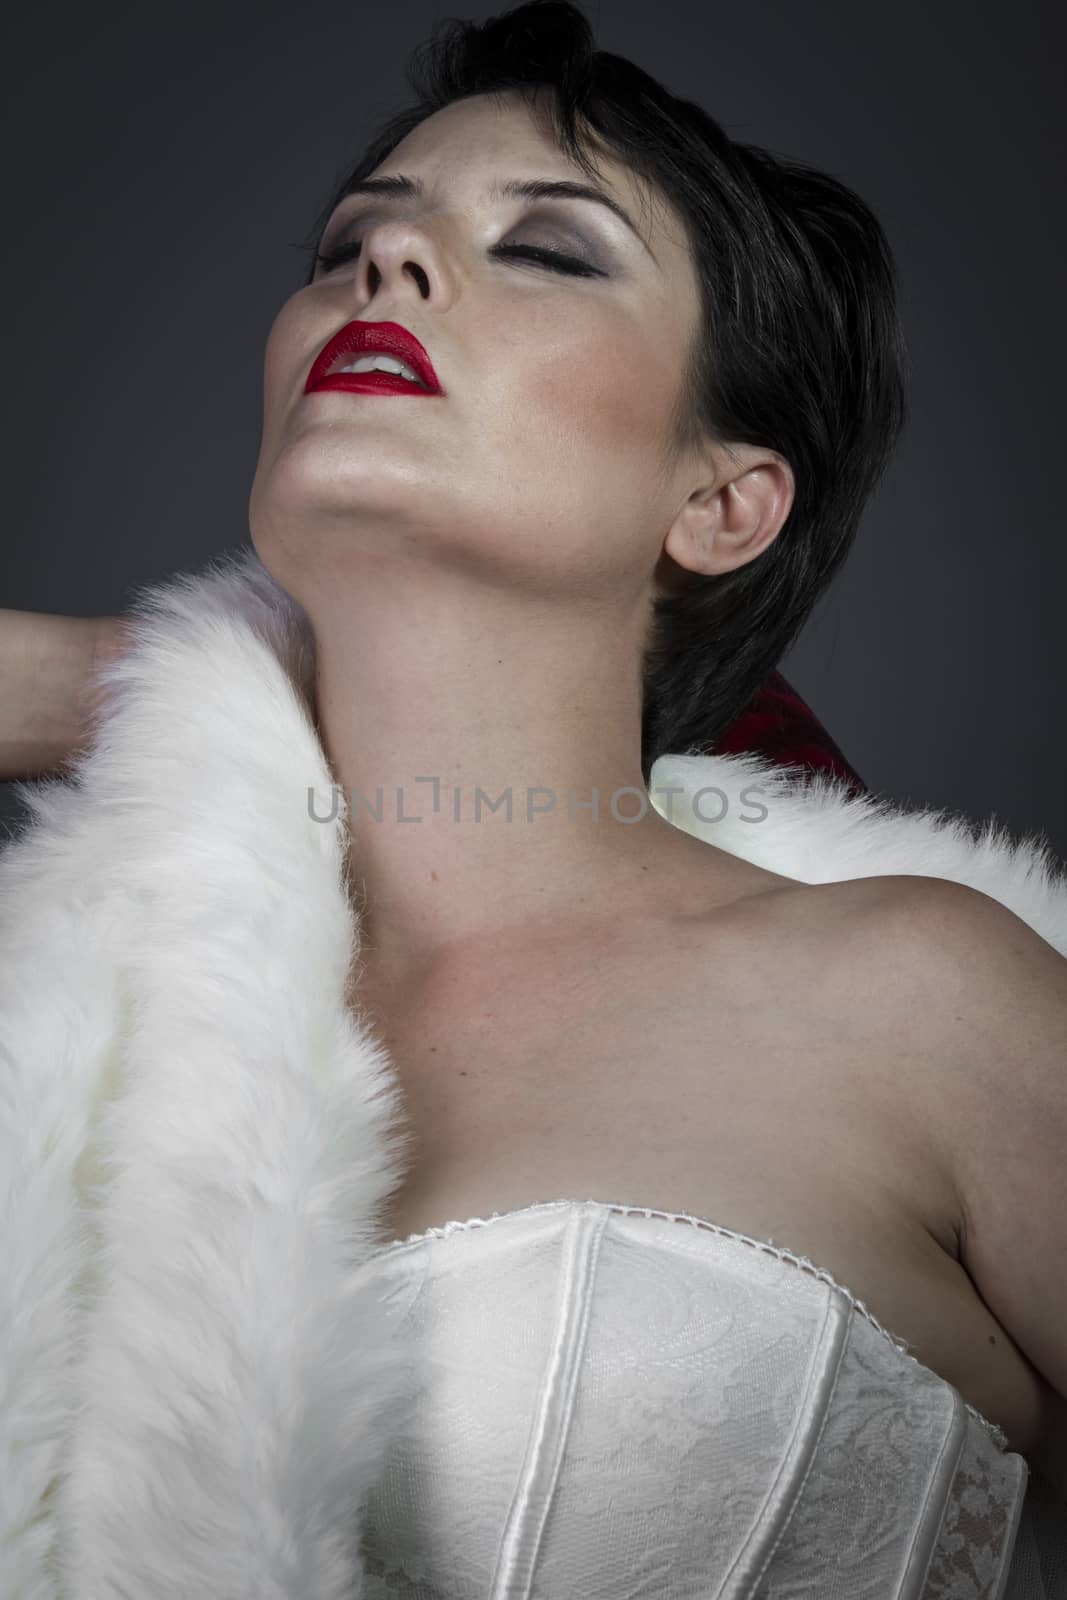 Spanish sensual brunette woman in white lingerie by FernandoCortes